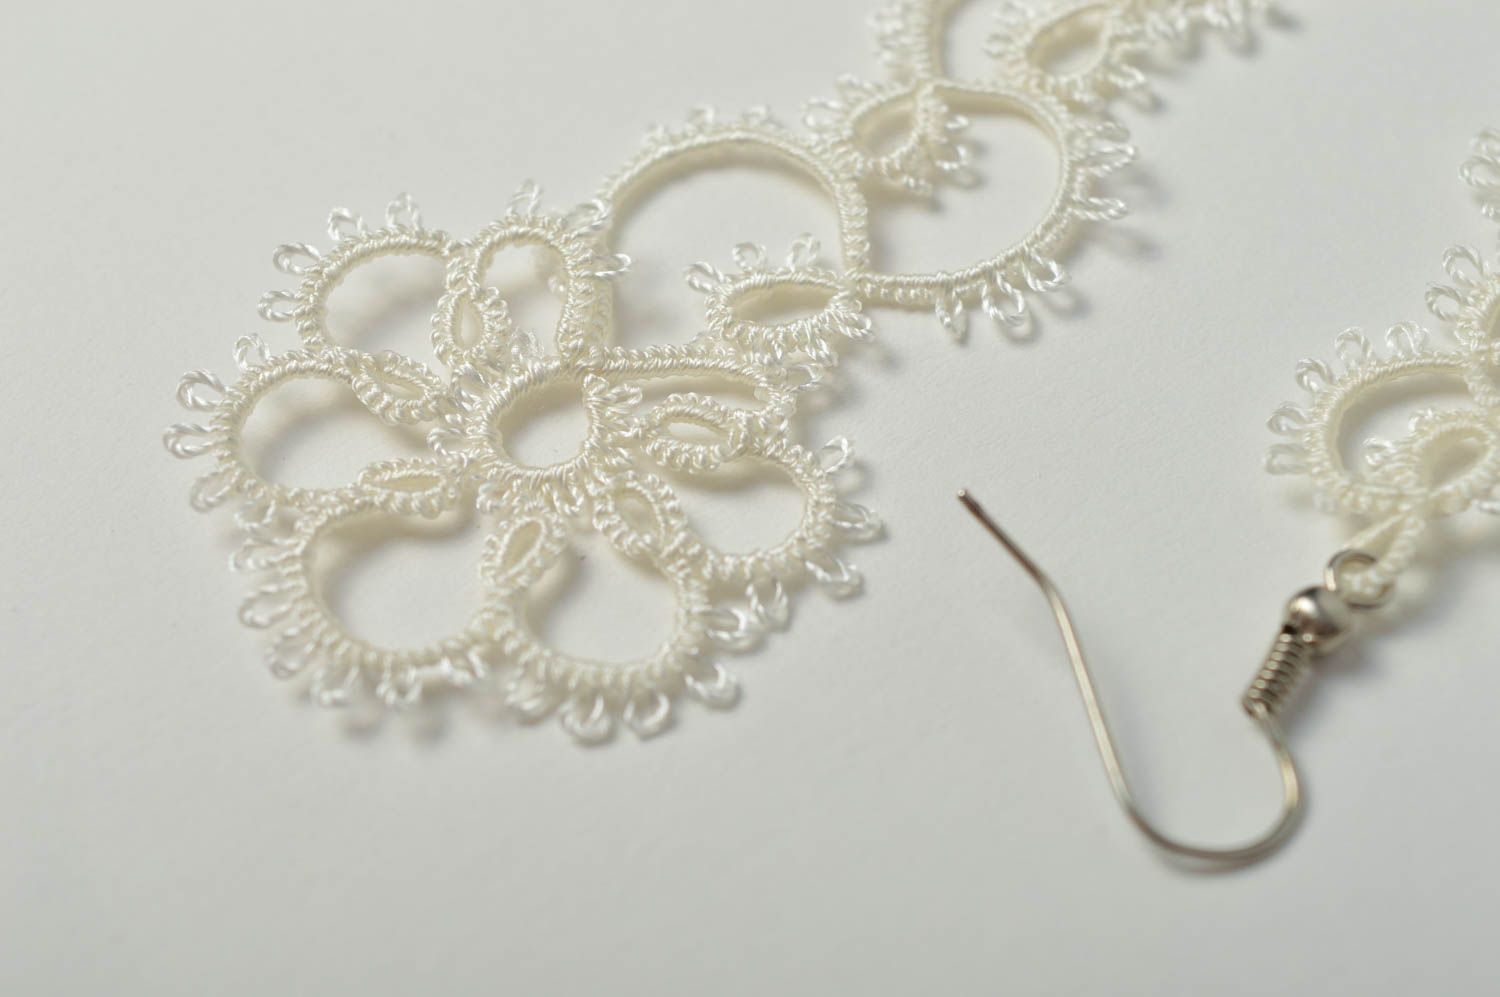 Handmade woven lace earrings textile earrings bridal jewelry designs gift ideas photo 5